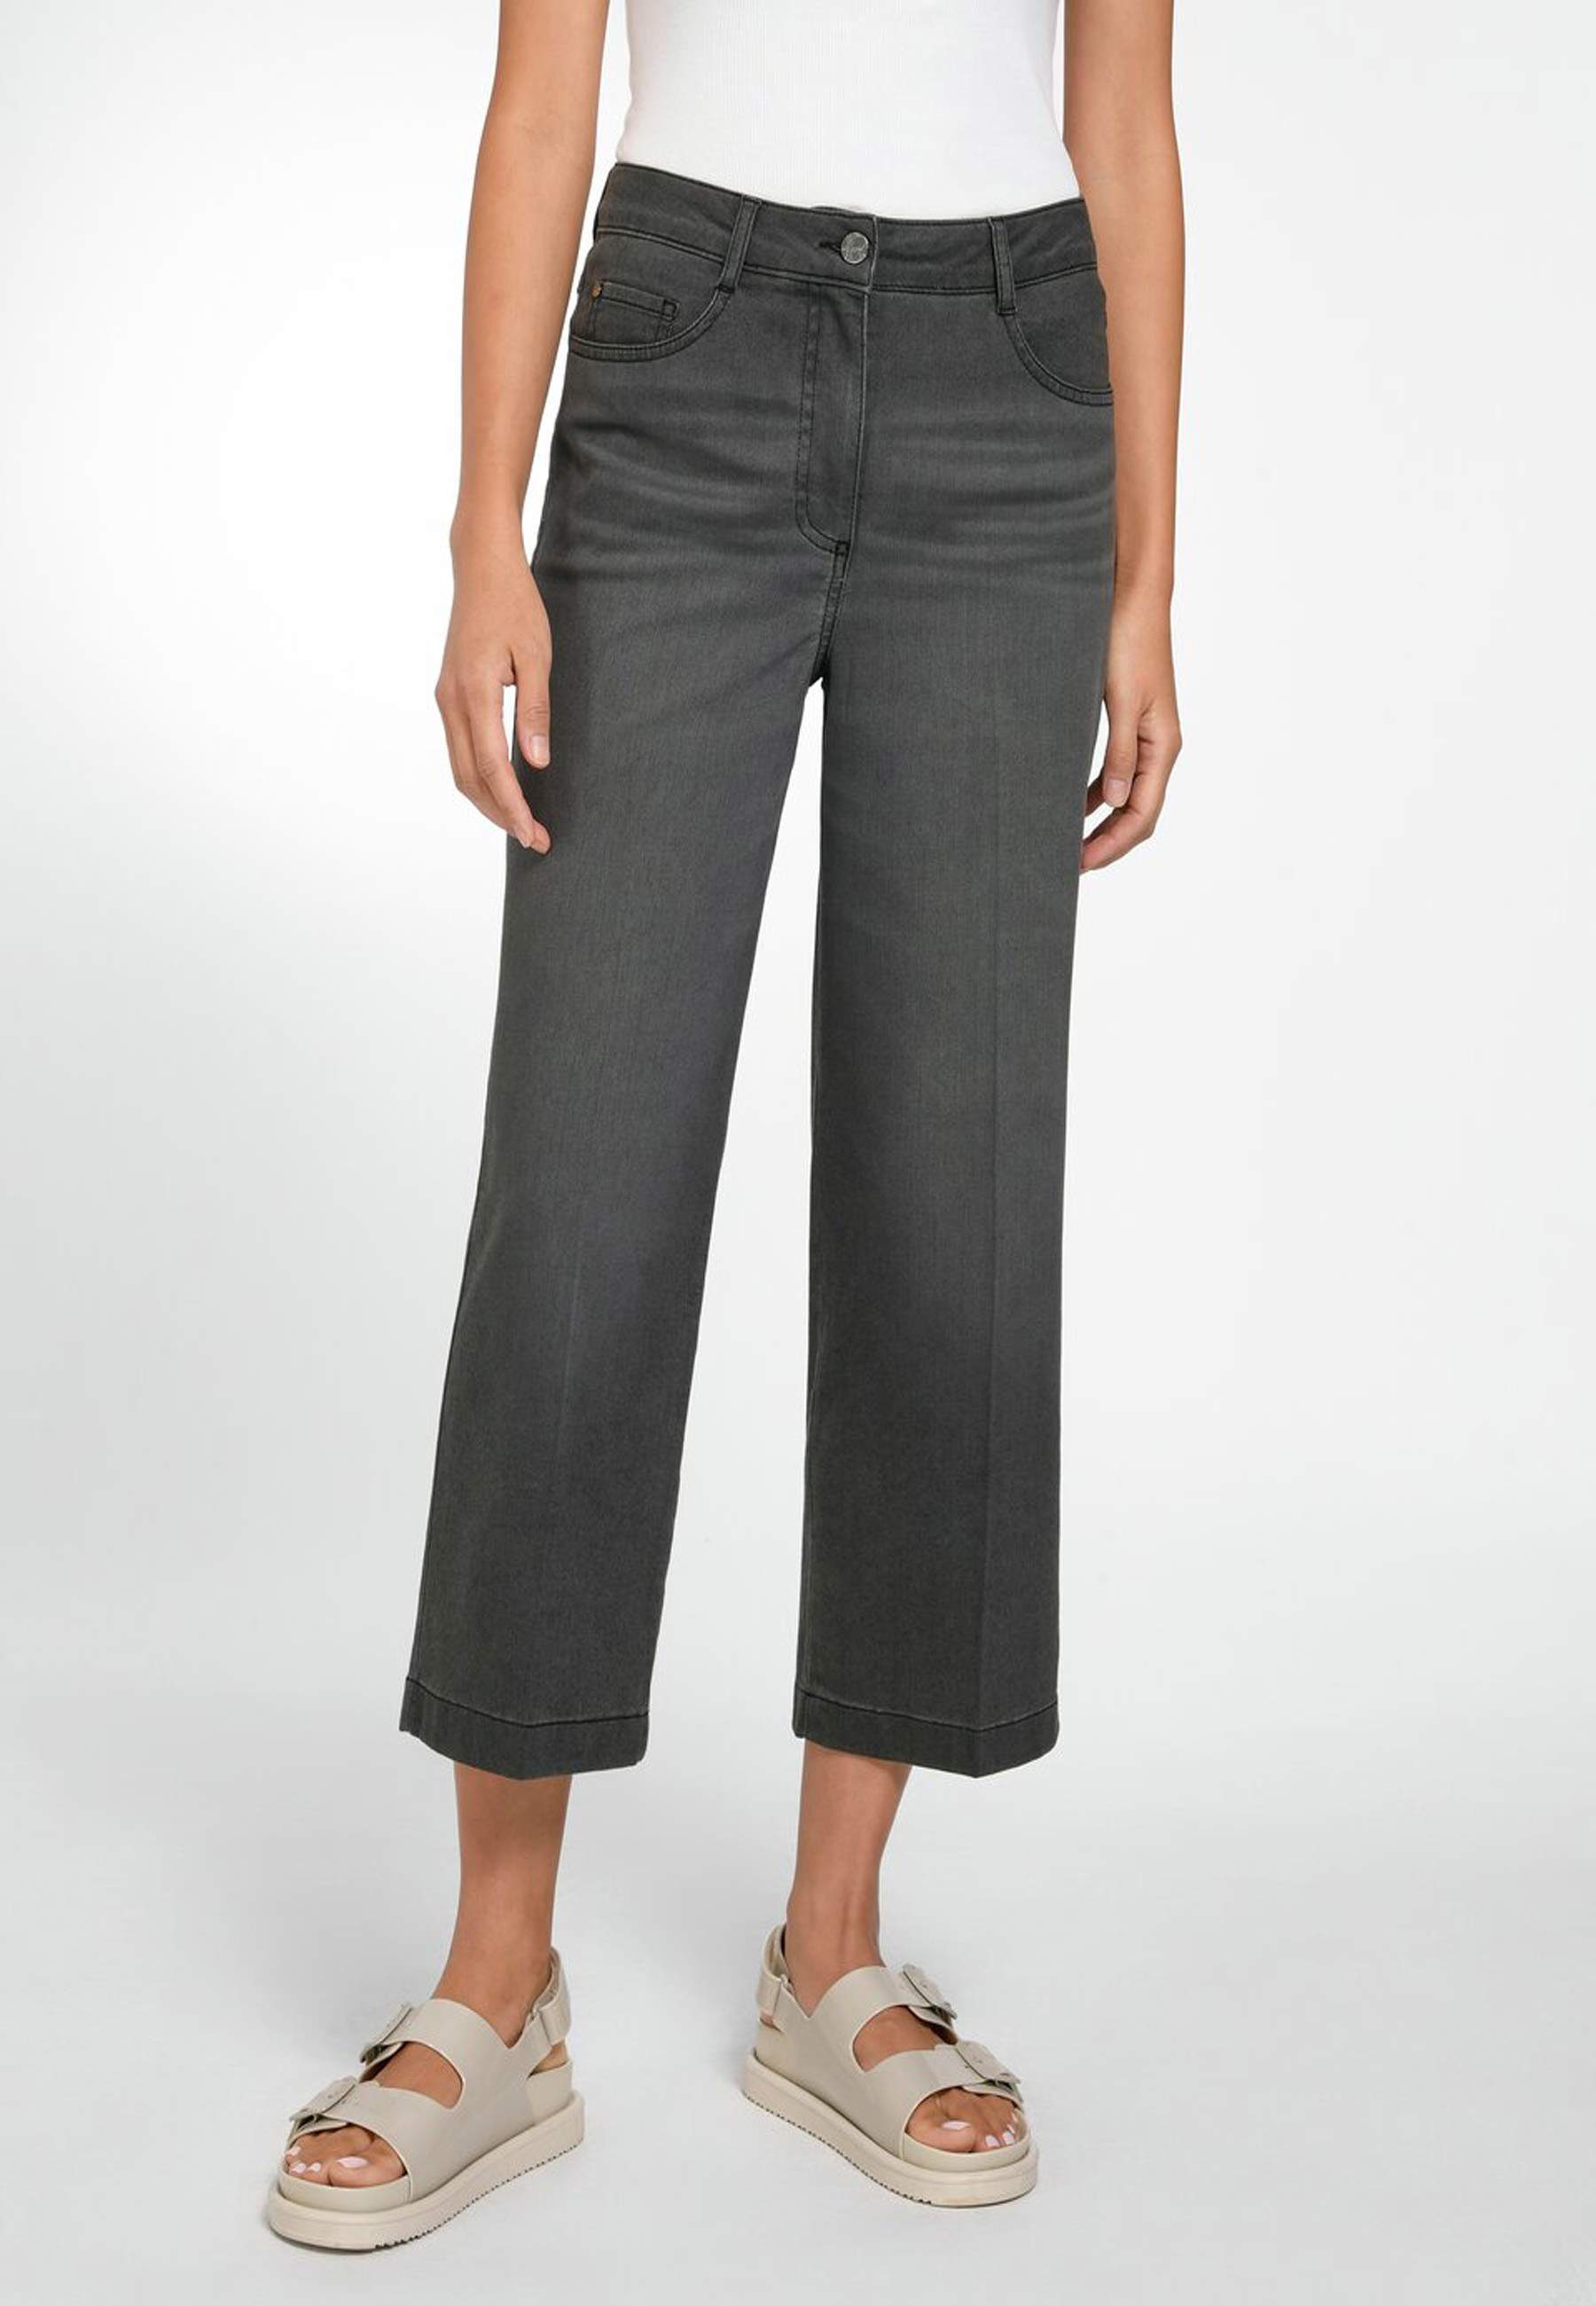 Cotton Basler klassischem mit hellgrau Design 5-Pocket-Jeans